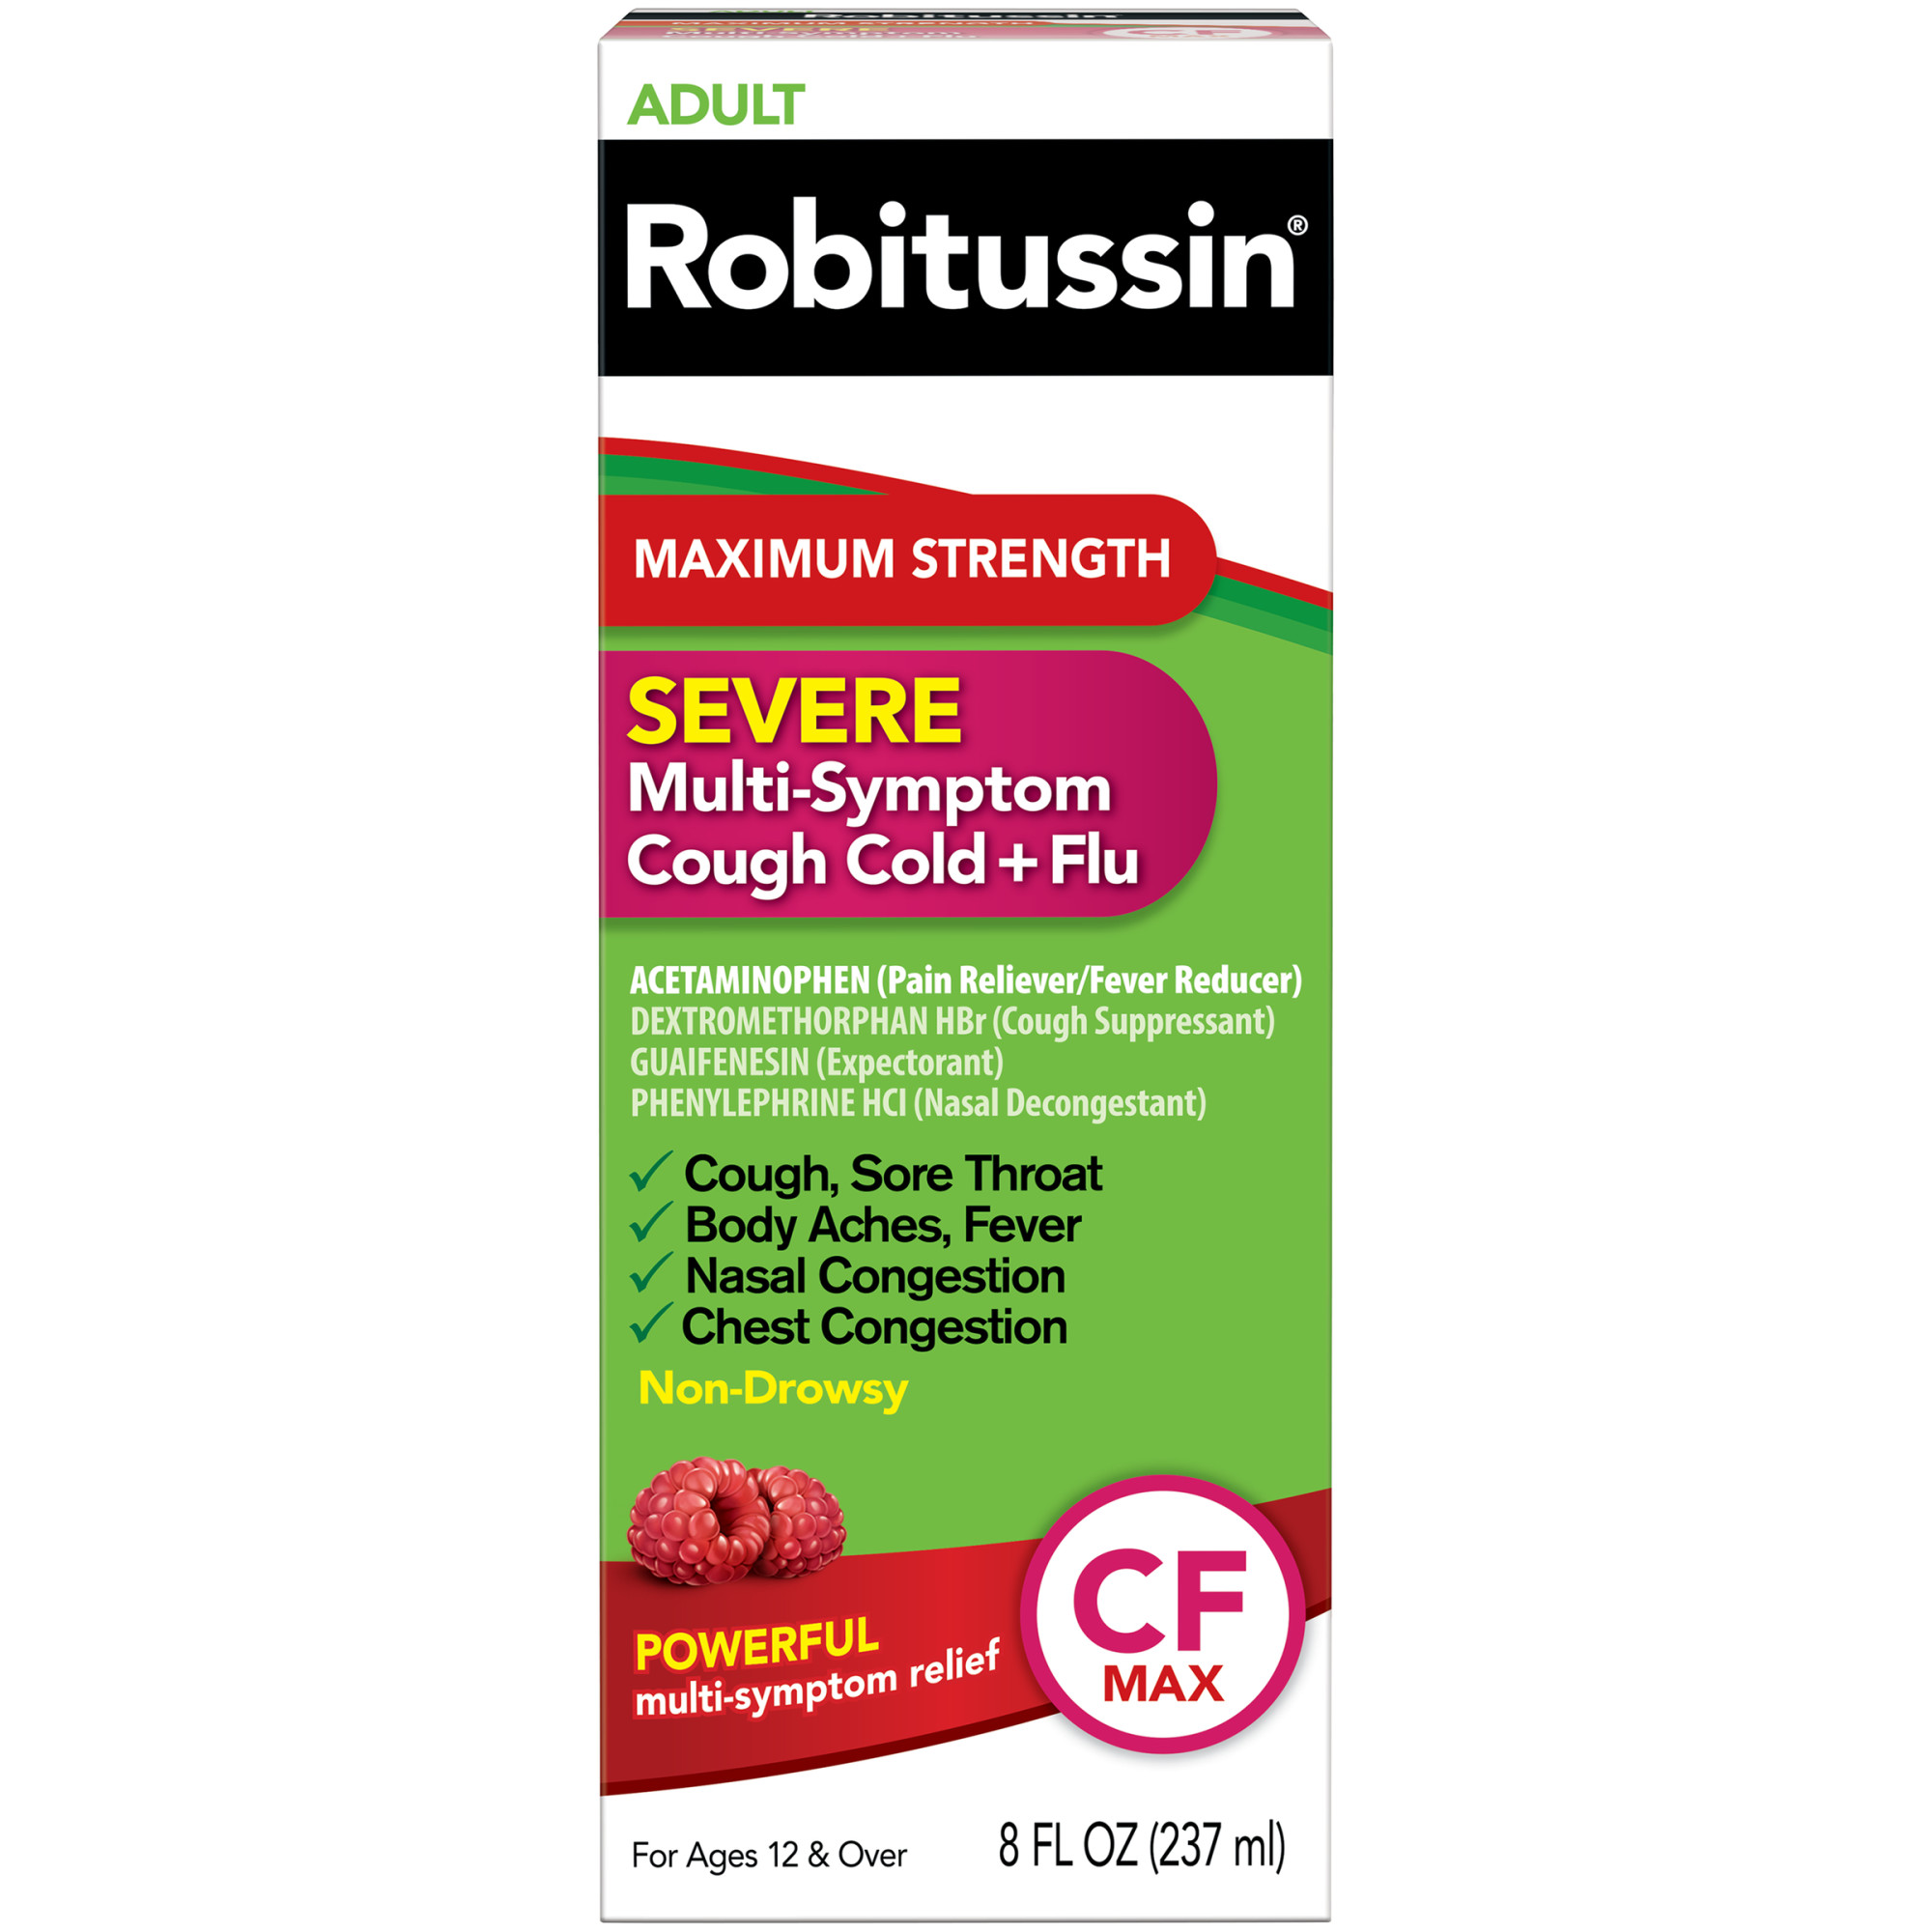 Robitussin Adult Maximum Strength Severe Multi-Symptom $2.54 at Walmart